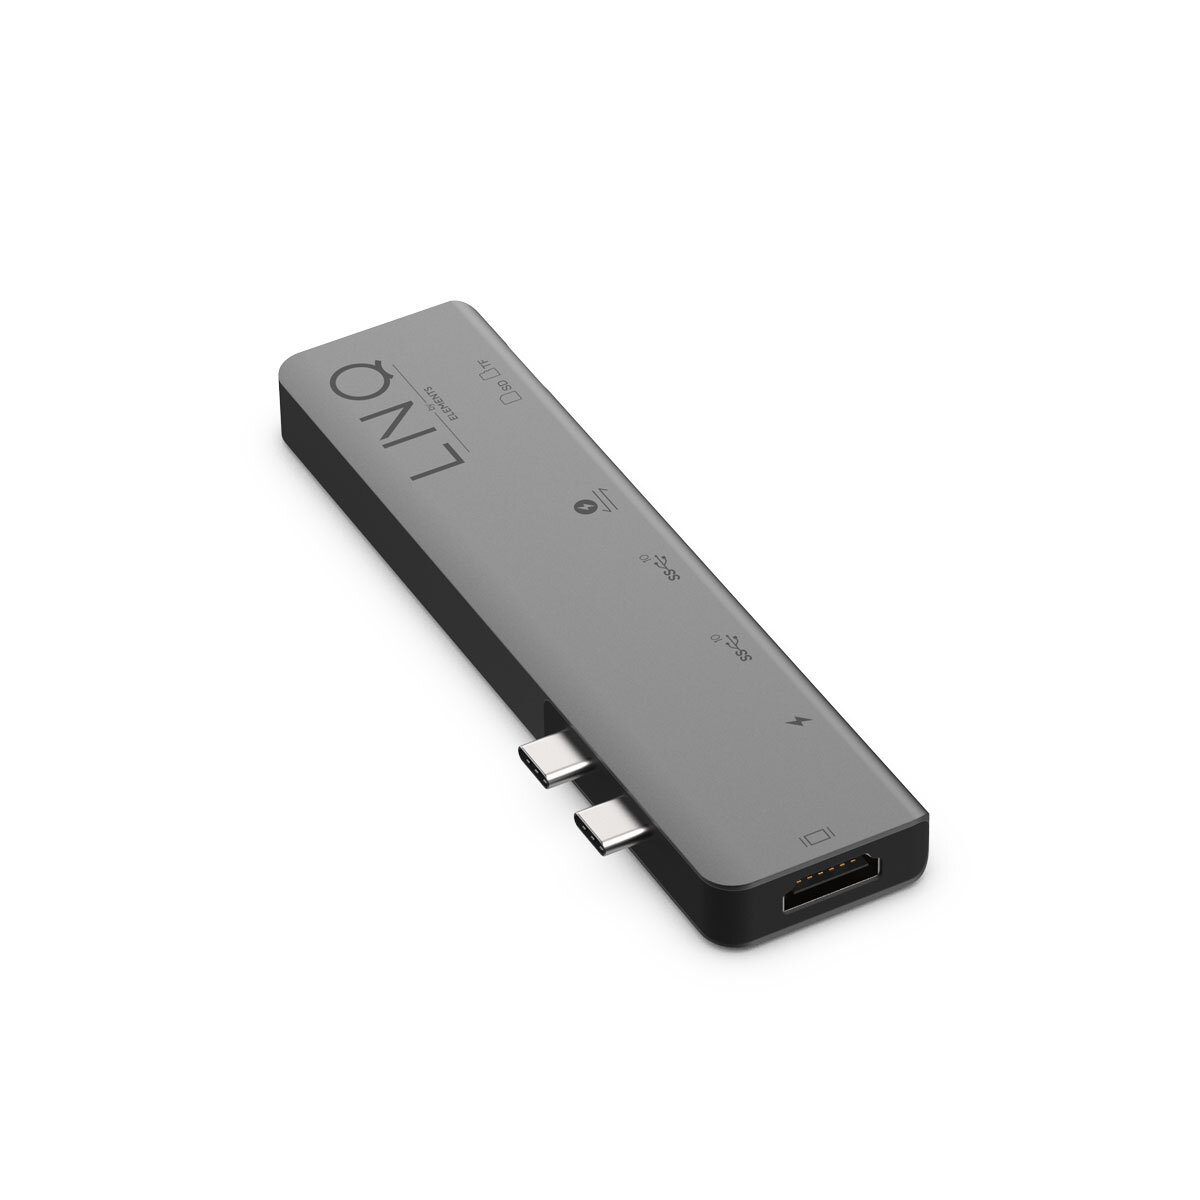 LINQ 7in2 PRO USB-C Macbook® TB Multiport Hub